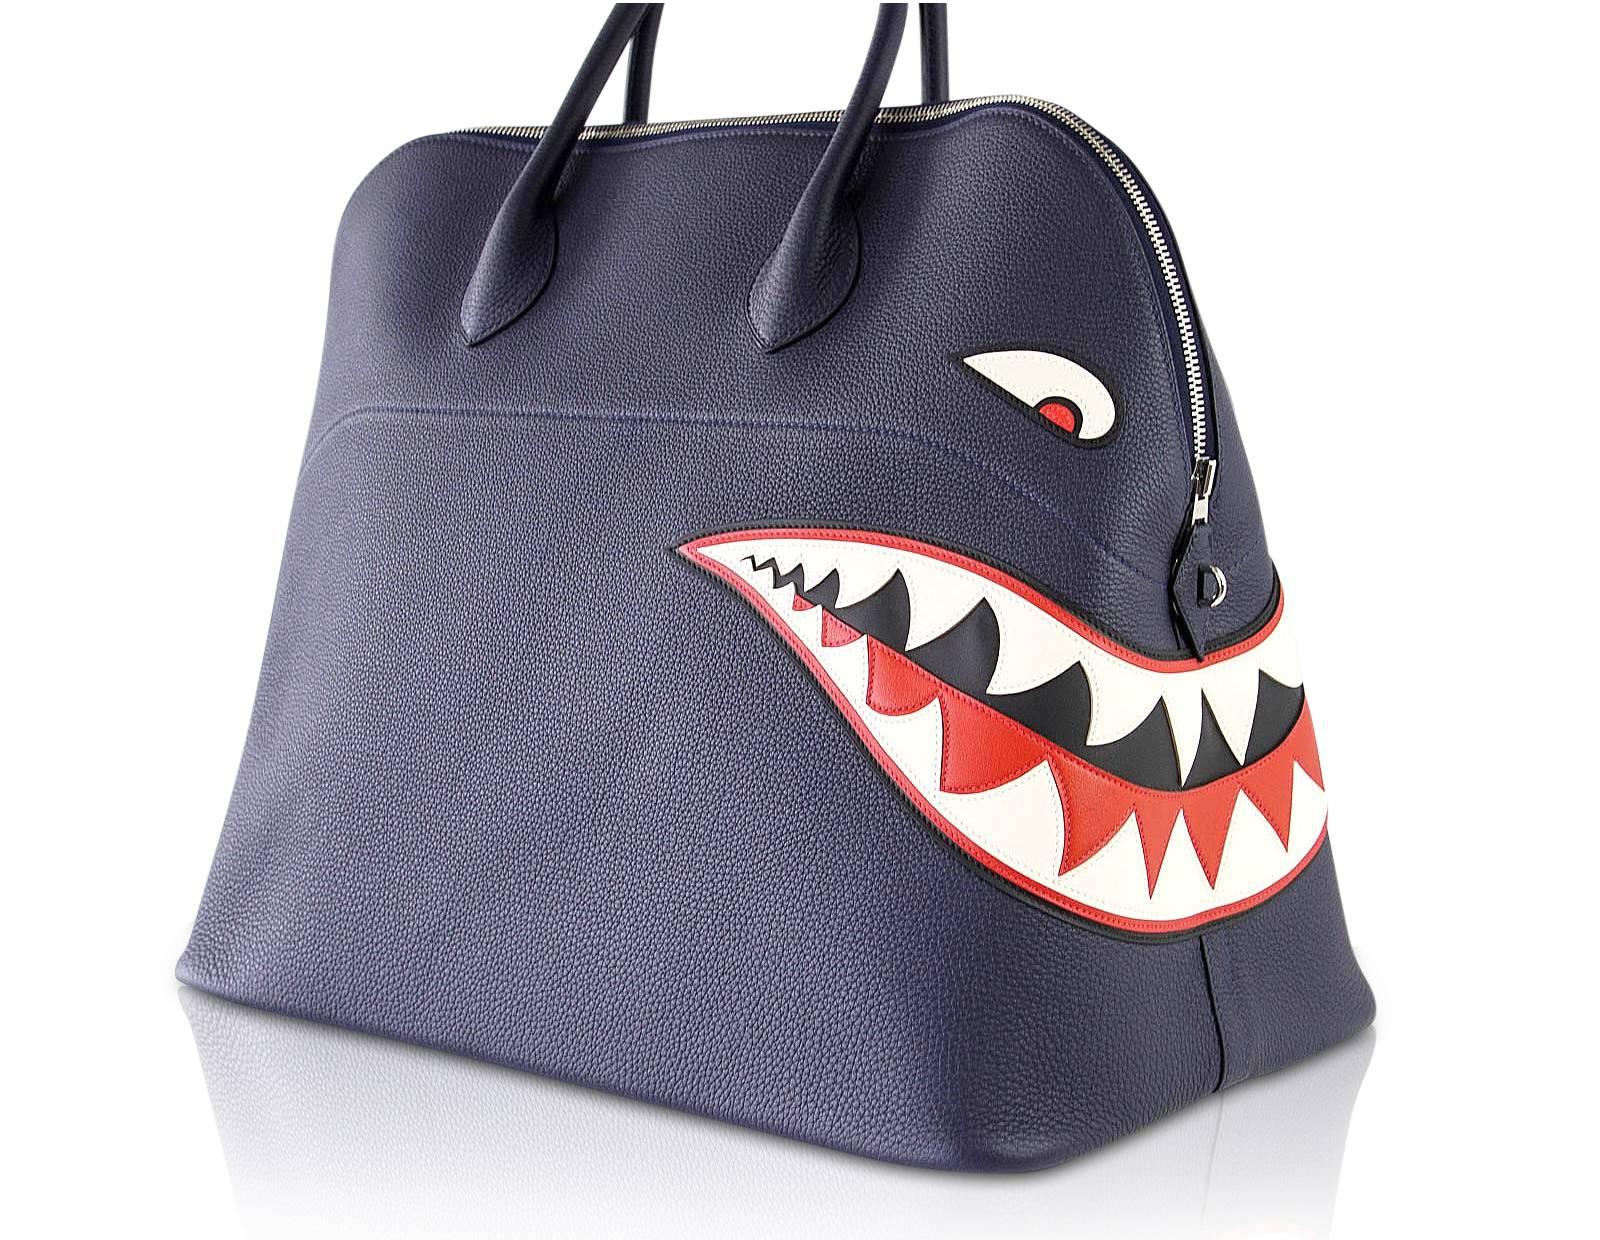 Women's or Men's Hermes Bolide 45 Men's Bag Runway Shark Monster Blue Indigo Limited Edition For Sale